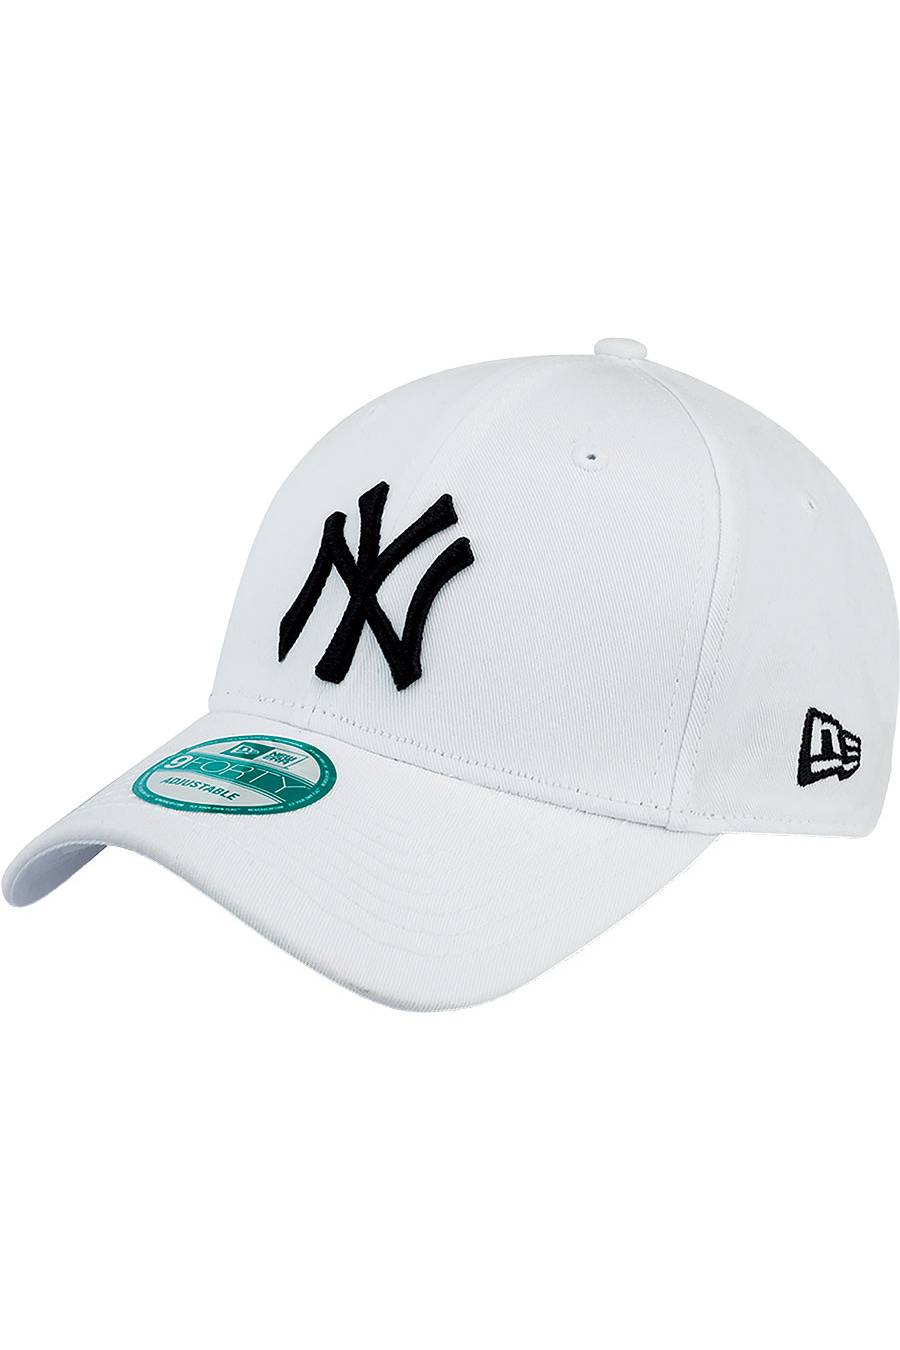 Gorra New Era 9Forty League basic New York Yankees 10745455 - msdsport